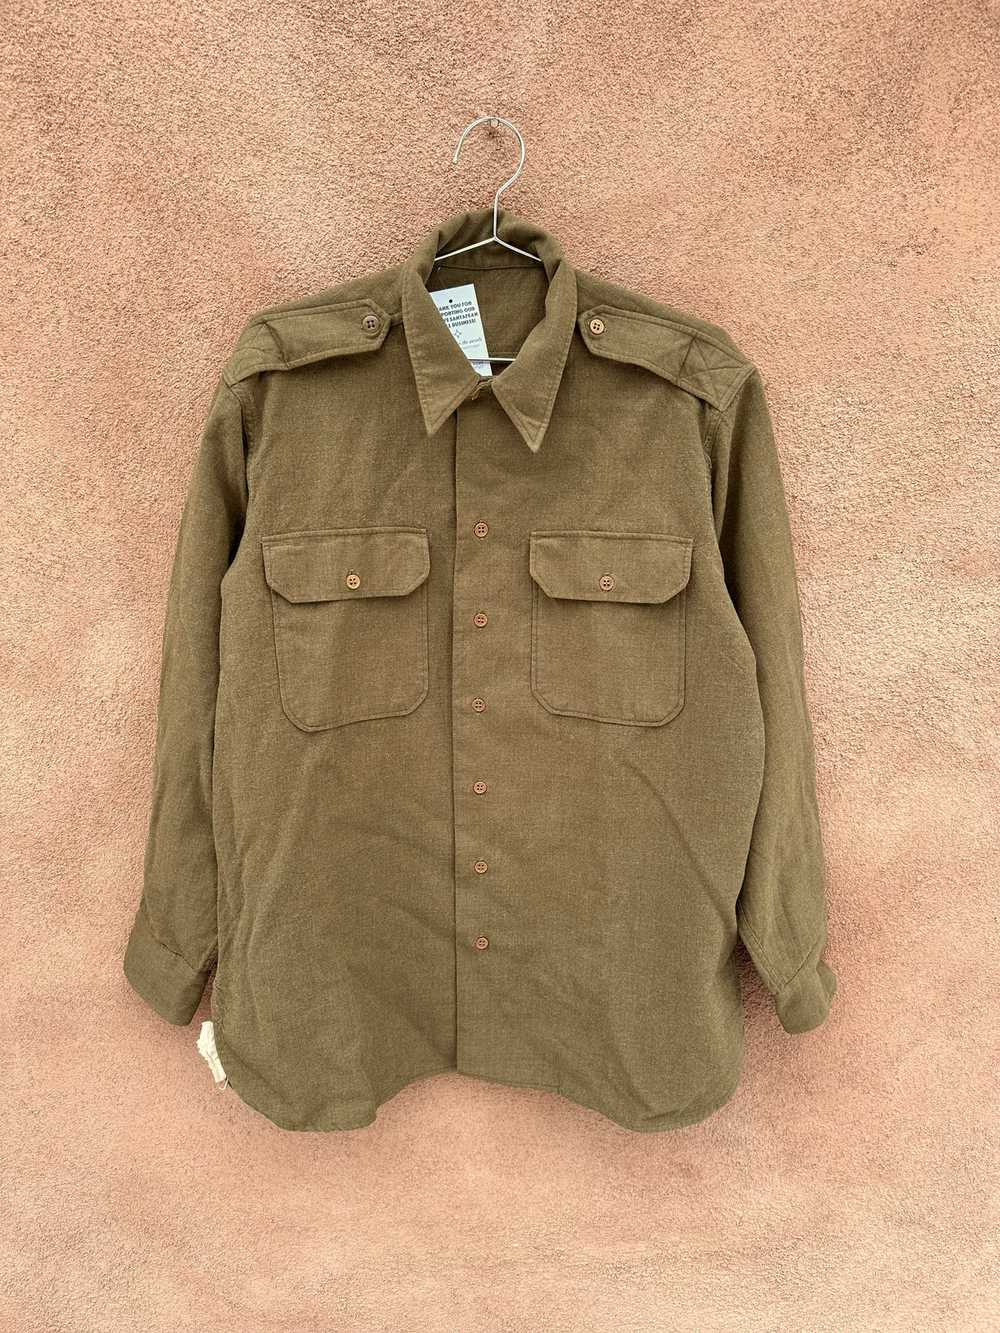 Drab Green WWII Wool U.S. Army Shirt - image 1